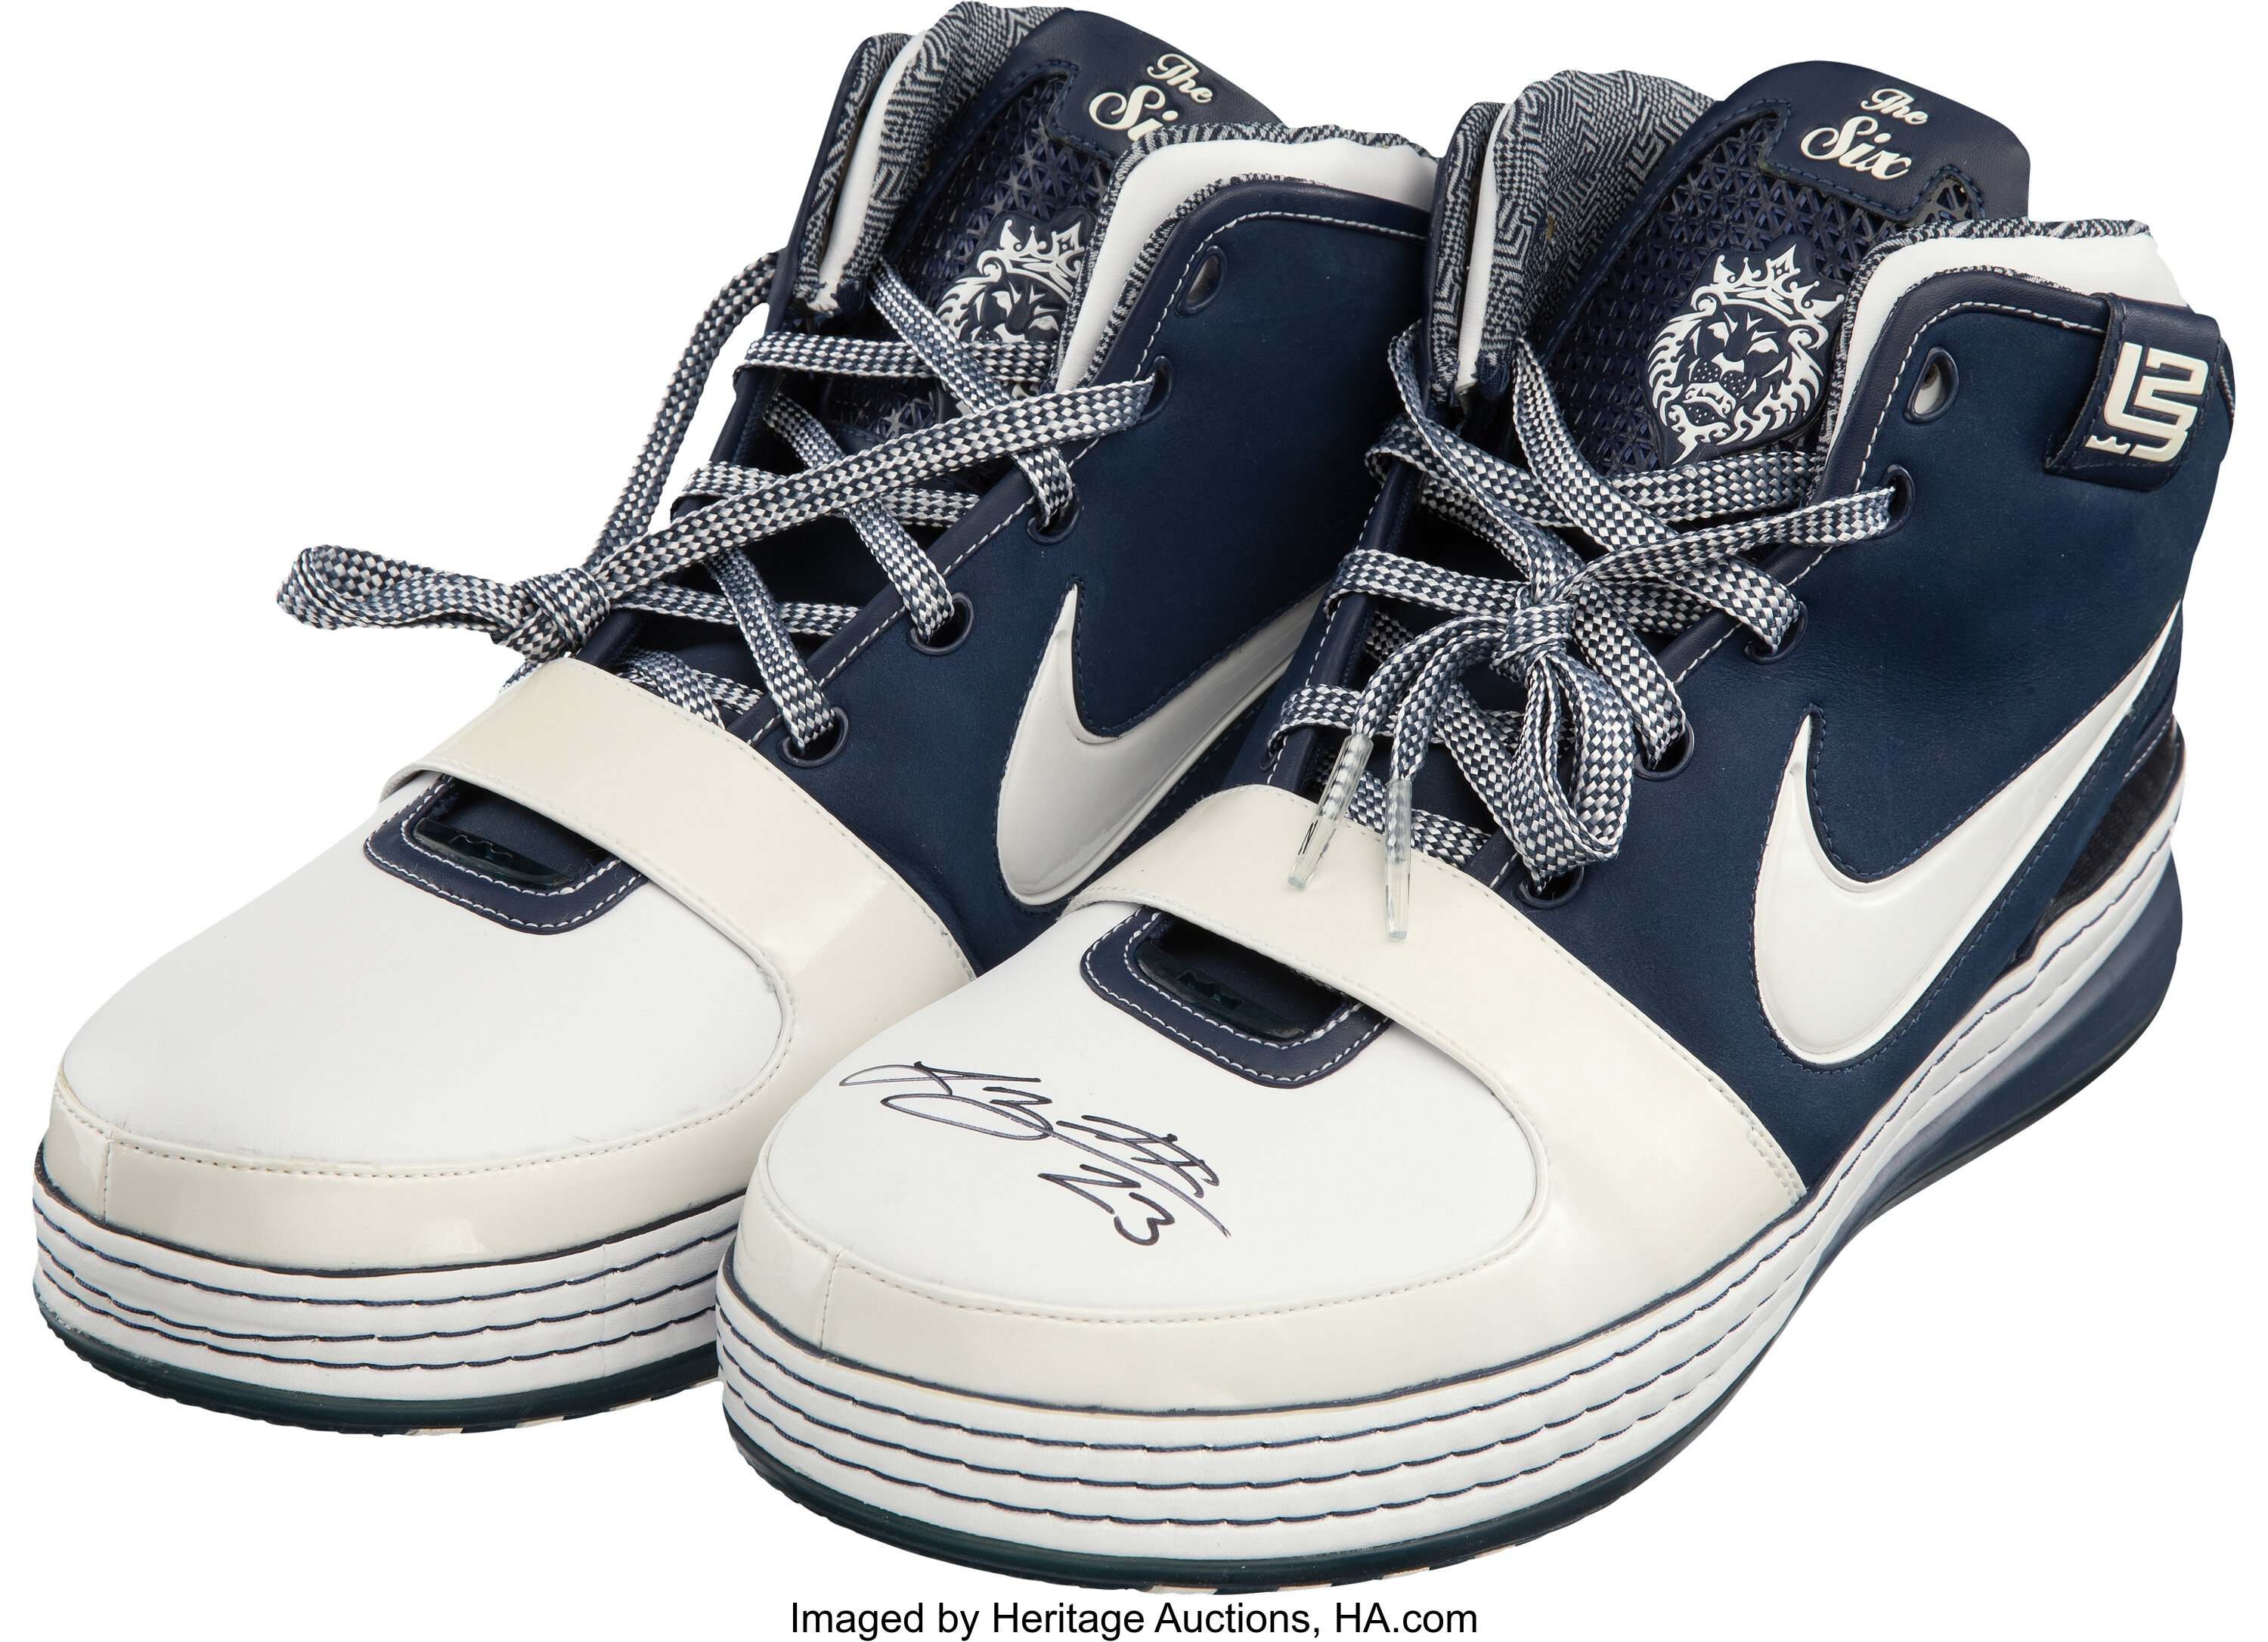 2008 LeBron James Signed Nike Zoom LeBron VI New York Yankees, Lot #80470